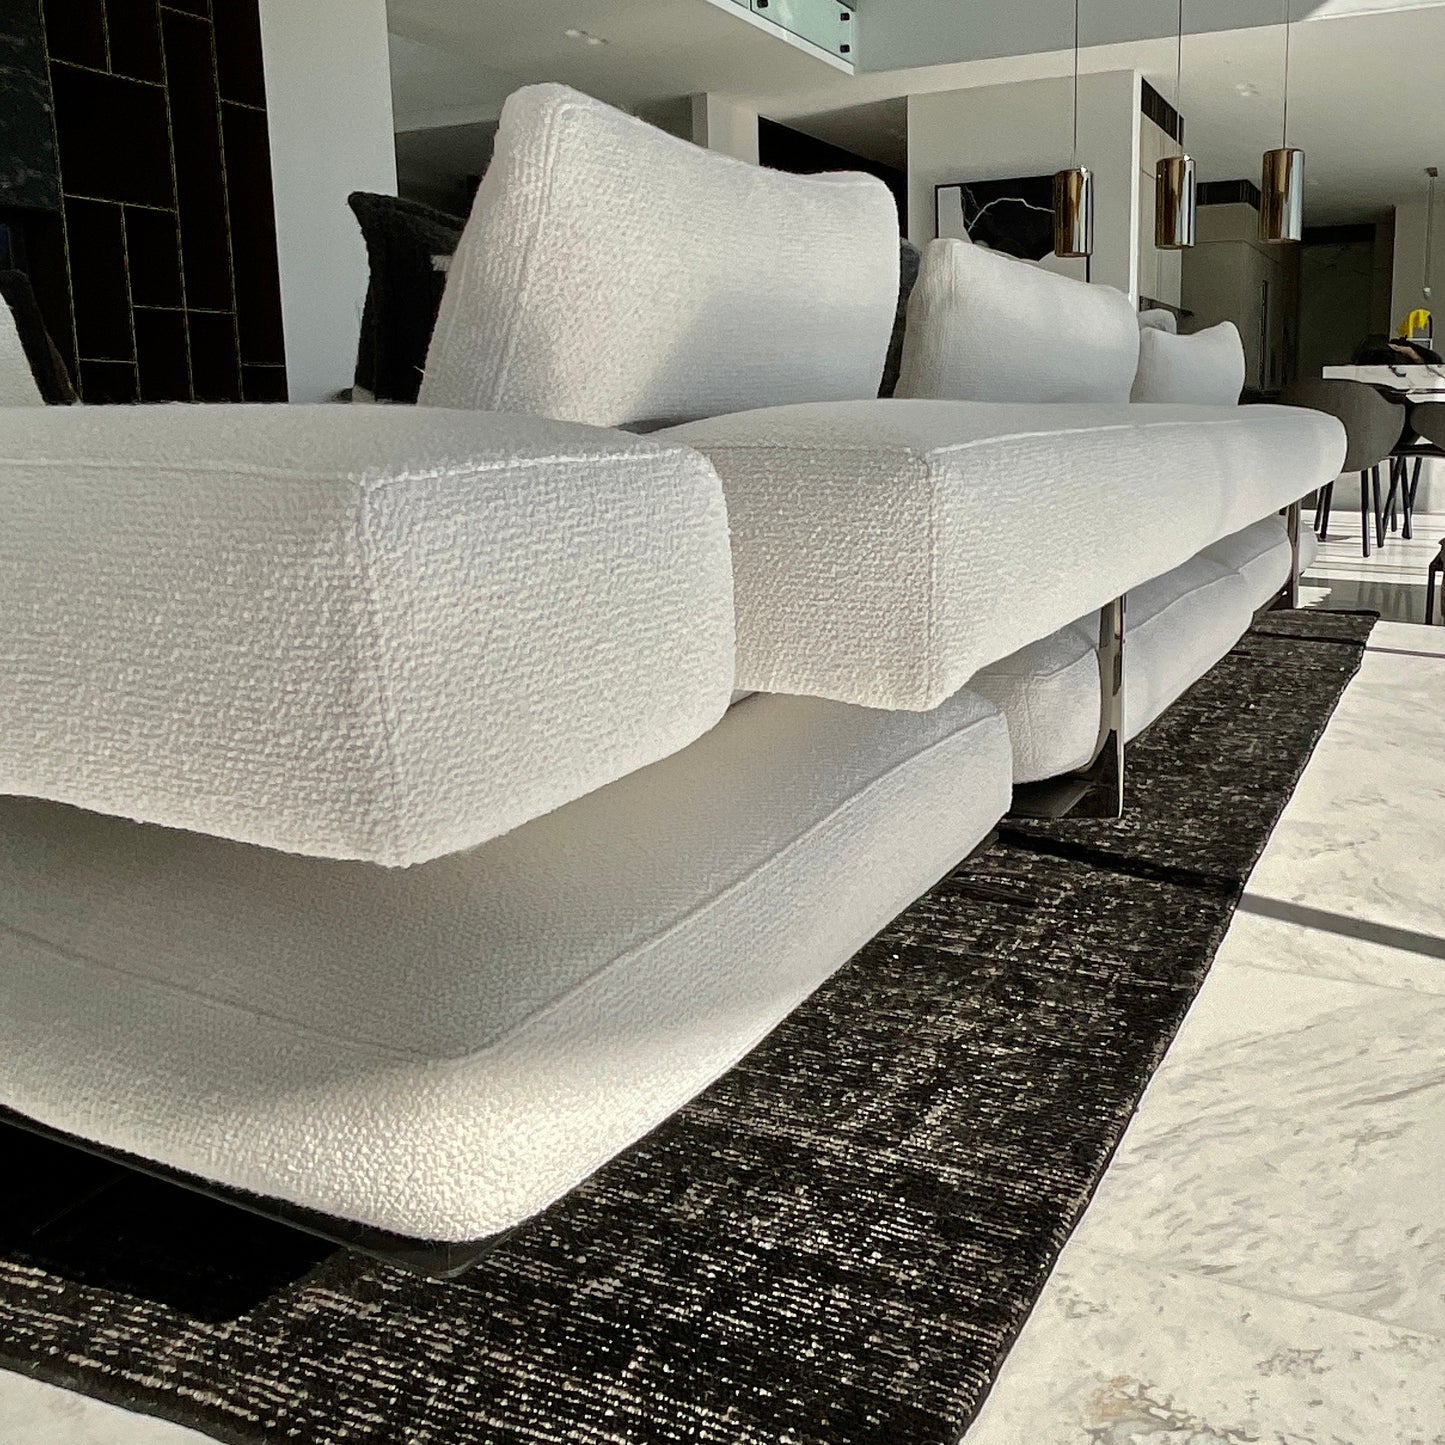 Wing Sofa by Antonio Citterio for Flexform